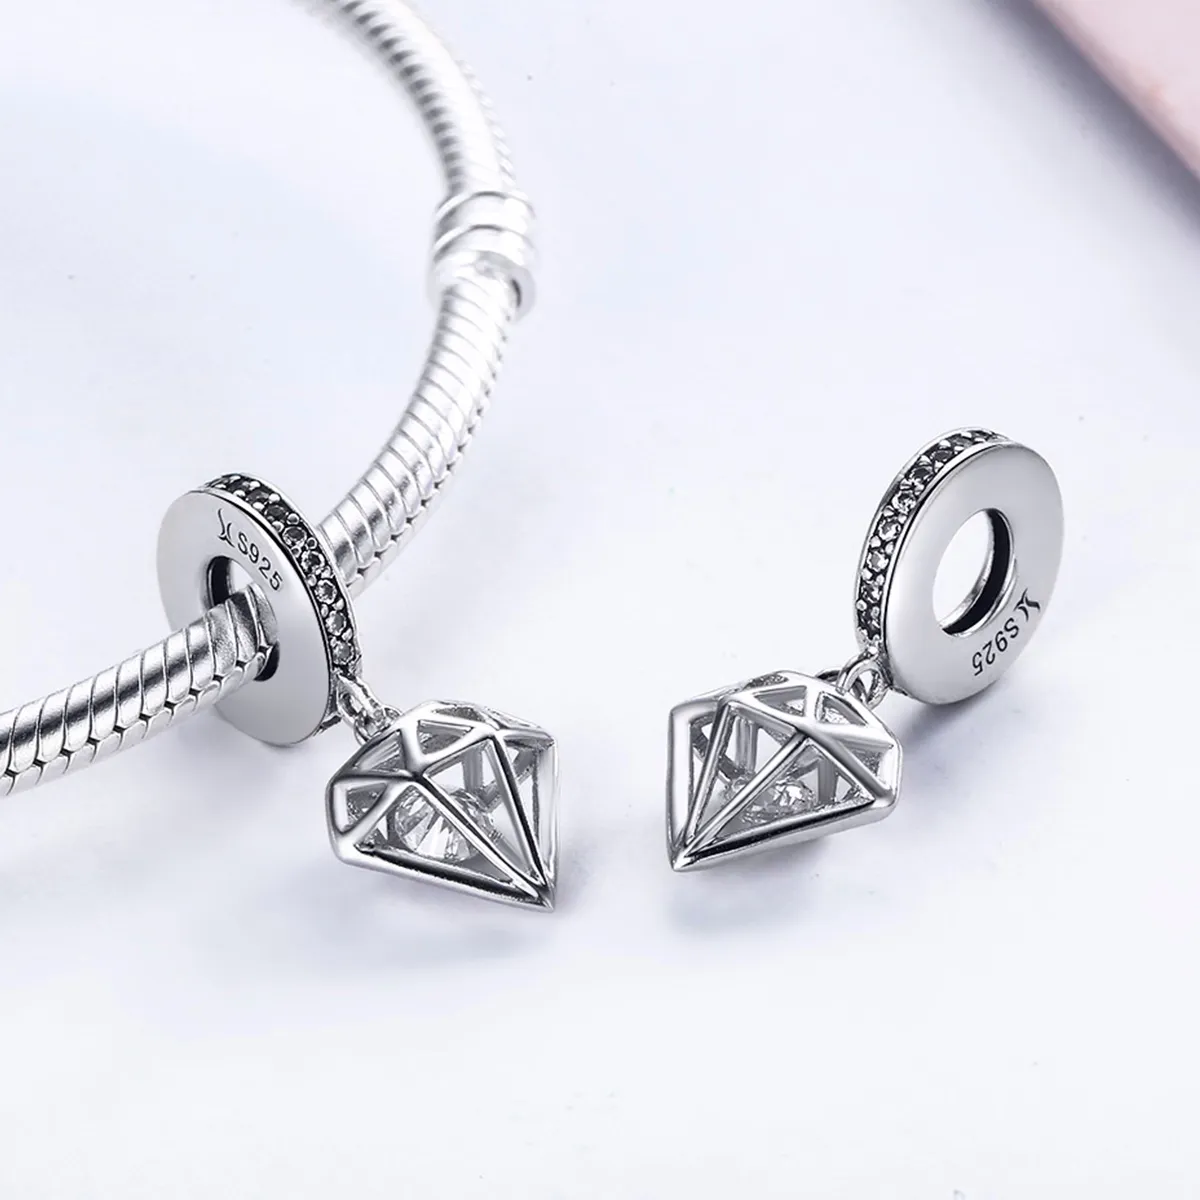 Talisman pandantiv Tip Pandora cu Diamant din argint - SCC186